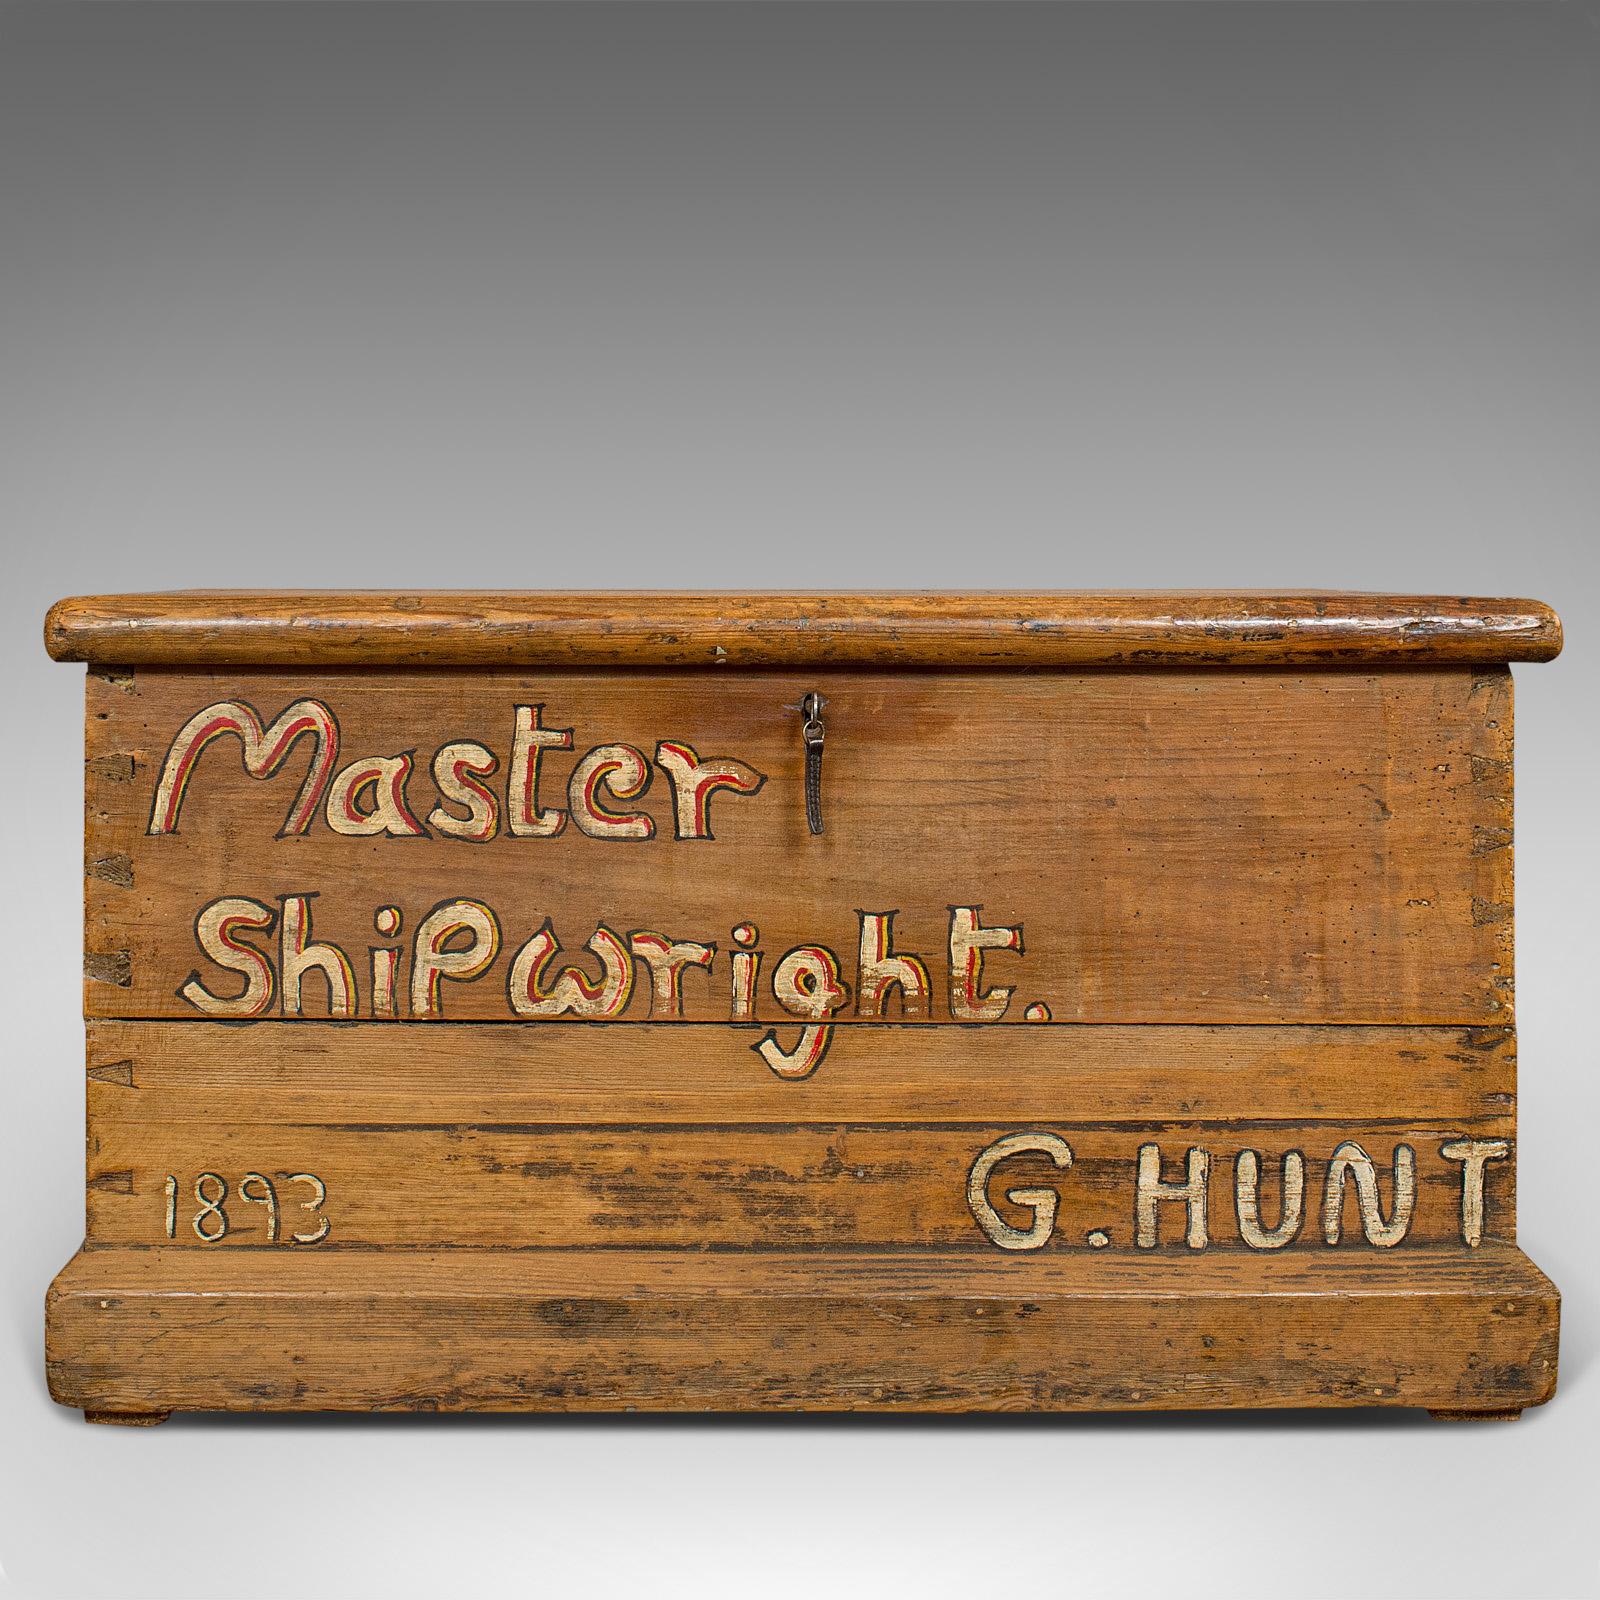 Victorian Antique Shipwright's Tool Chest, English, Pine, Merchant's, Trunk, circa 1870